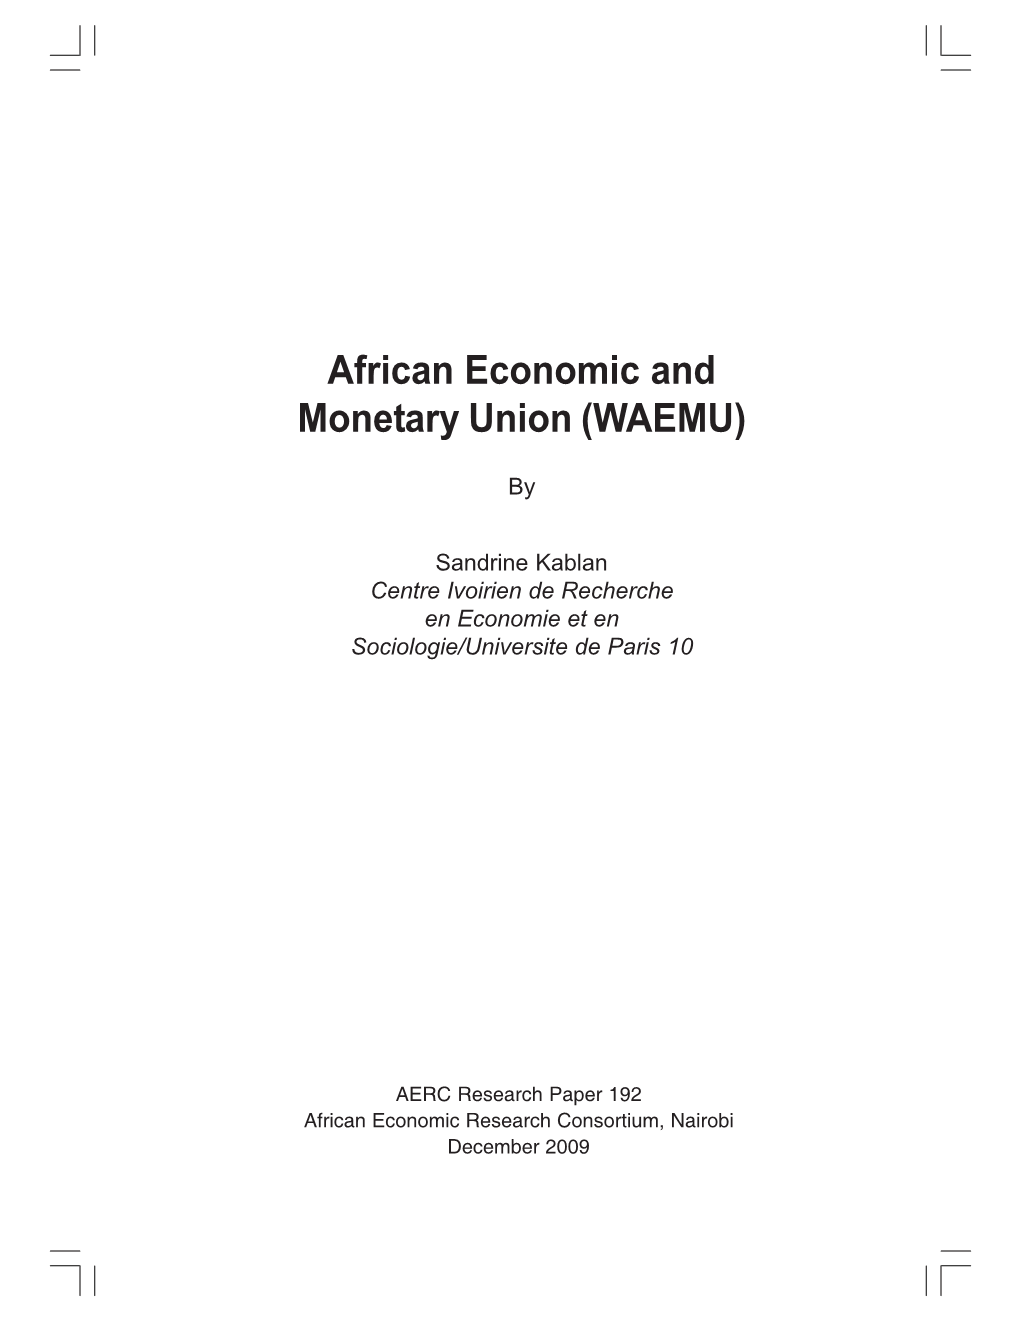 African Economic and Monetary Union (WAEMU)